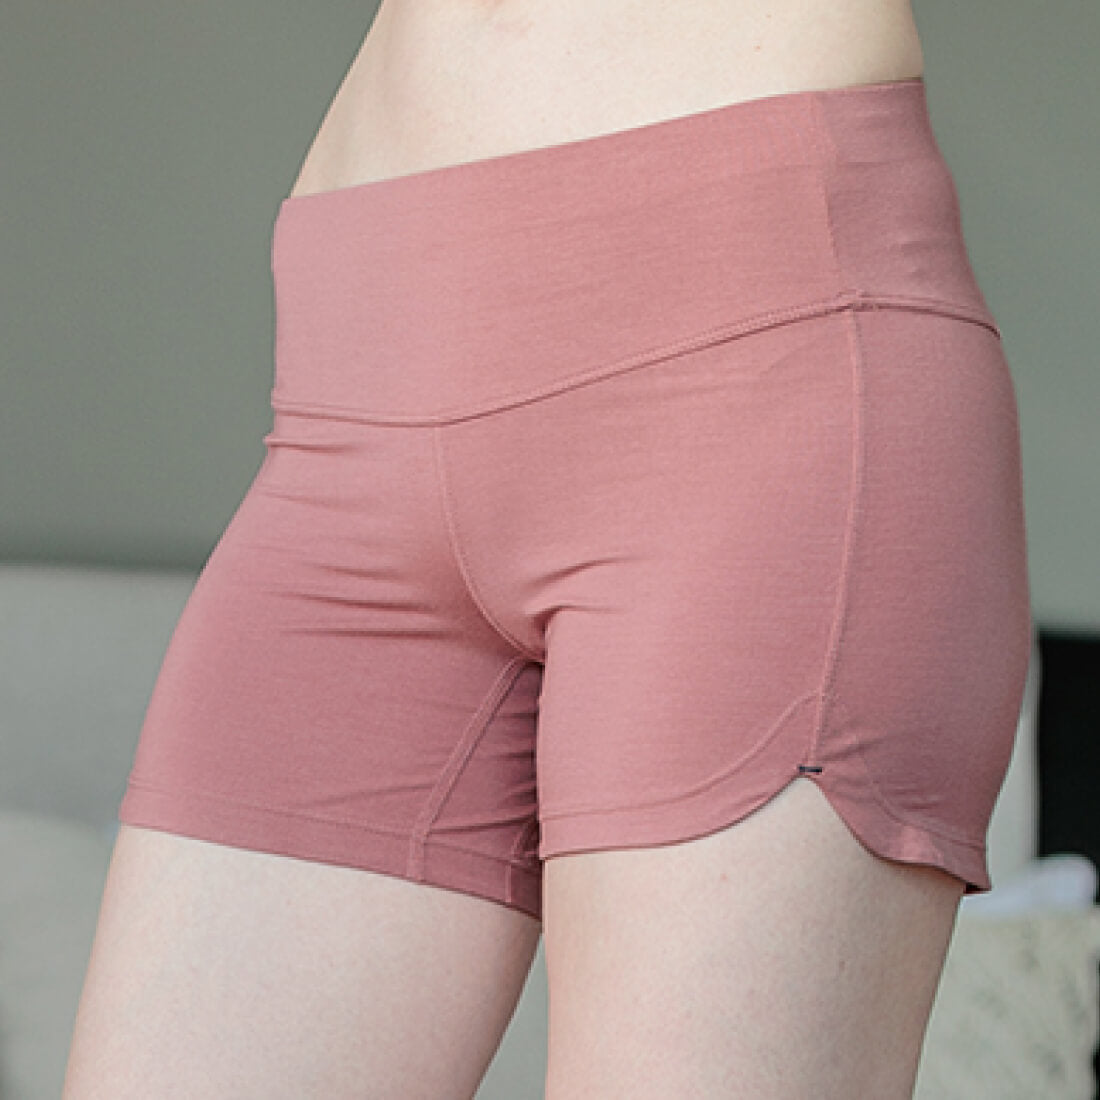 The softest women's sleep shorts